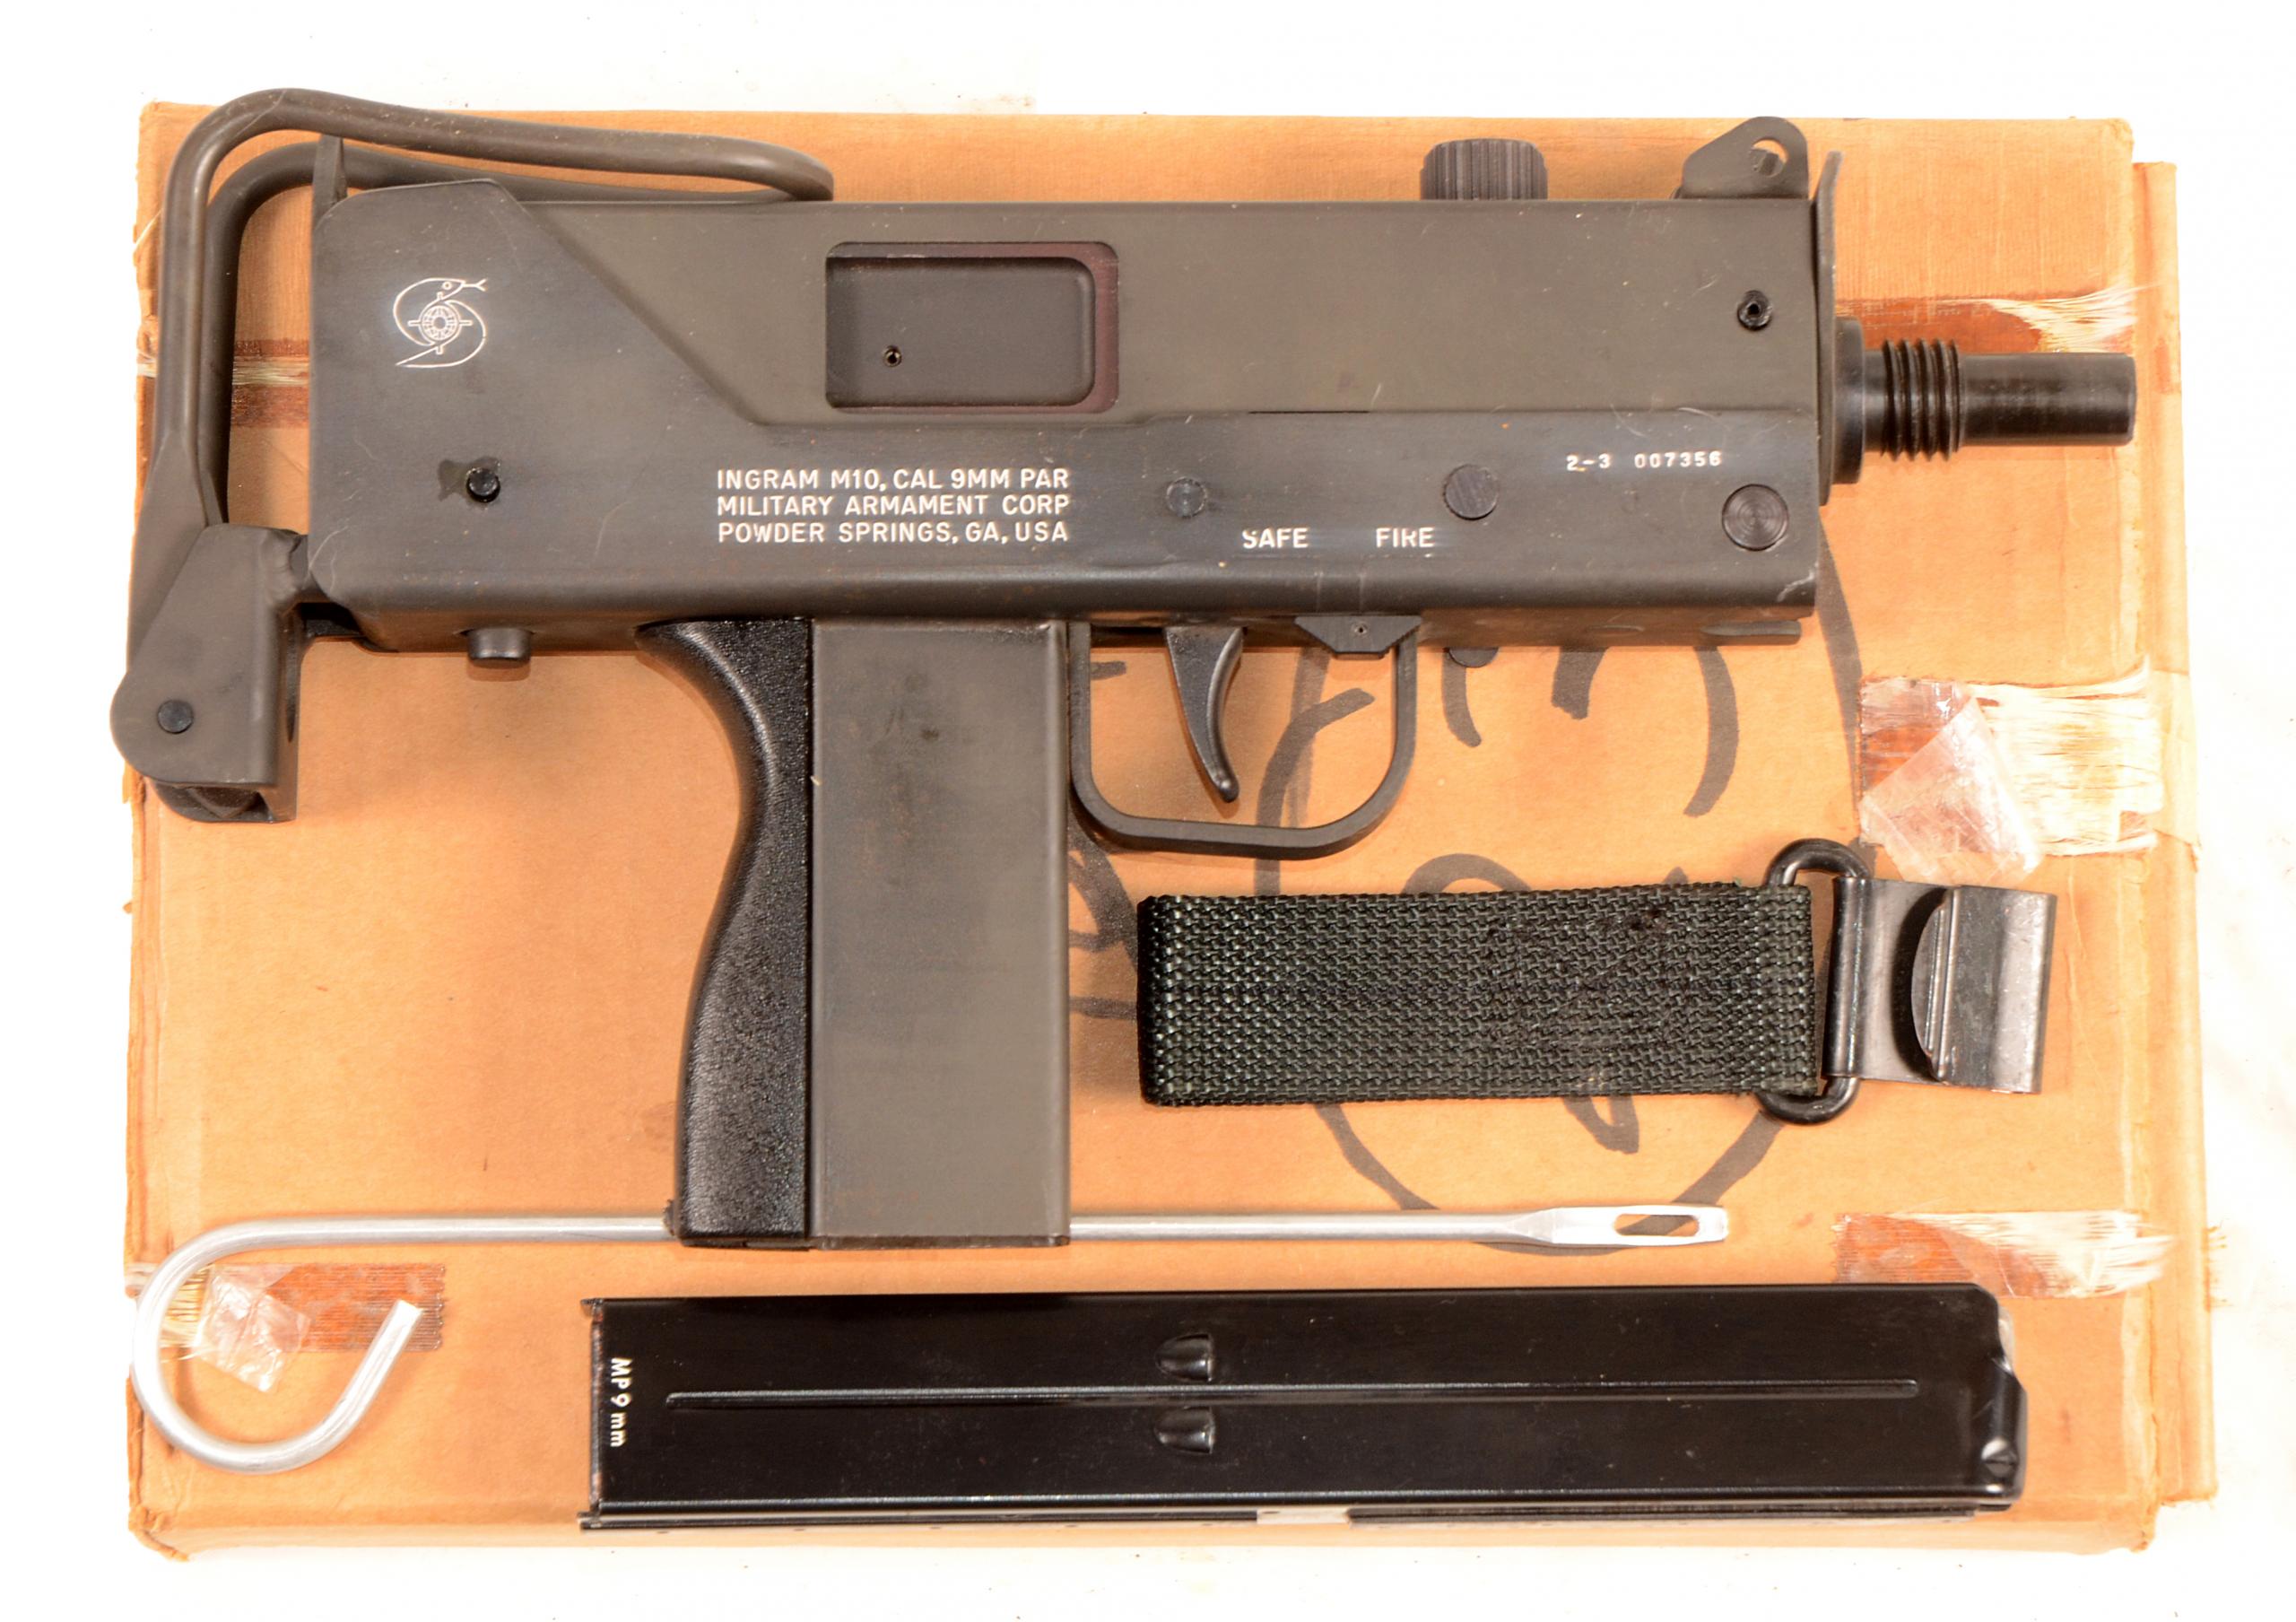 A very nice one-owner Powder Springs, GA MAC 10, 9mm submachine gun. 